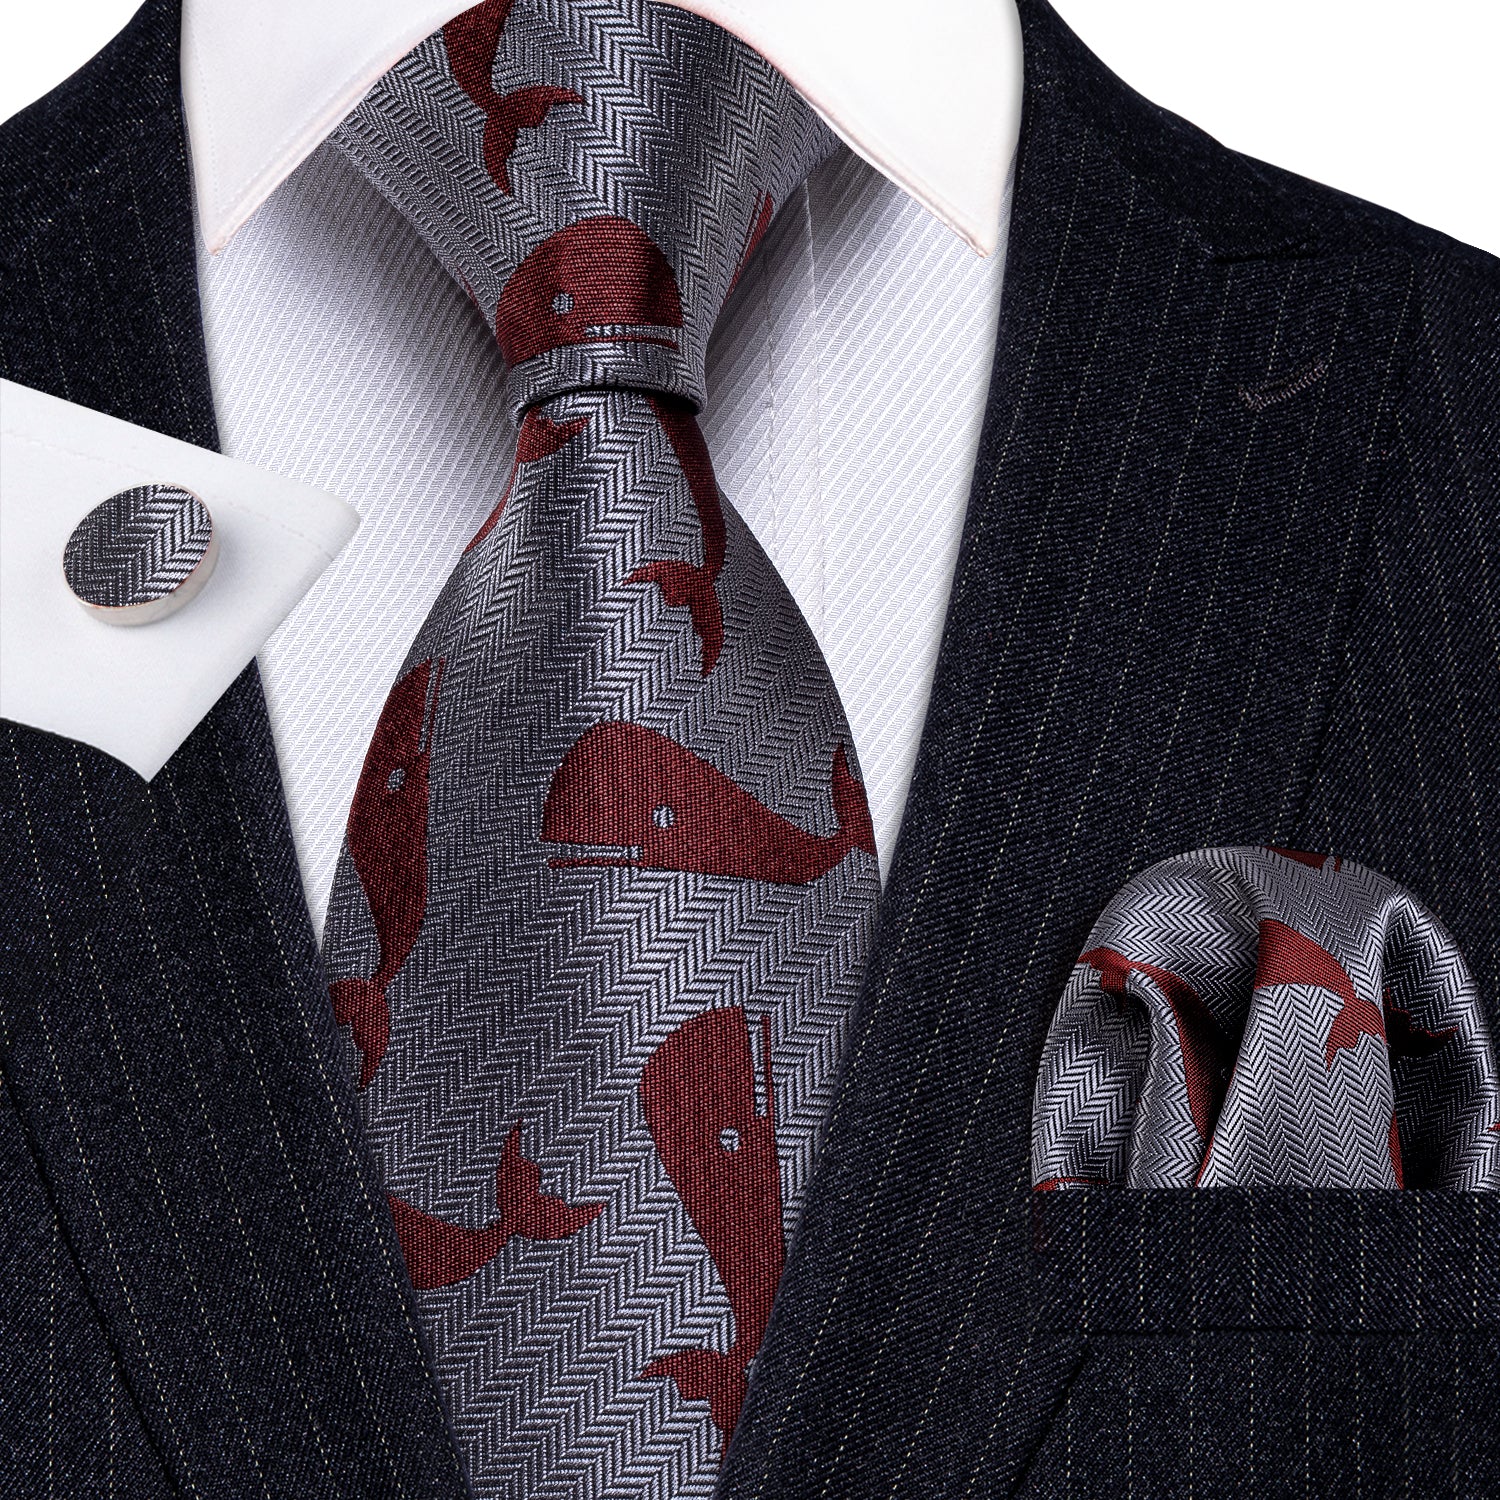 Barry.wang Grey Tie Red Whale Novelty Silk Tie Hanky Cufflinks Set